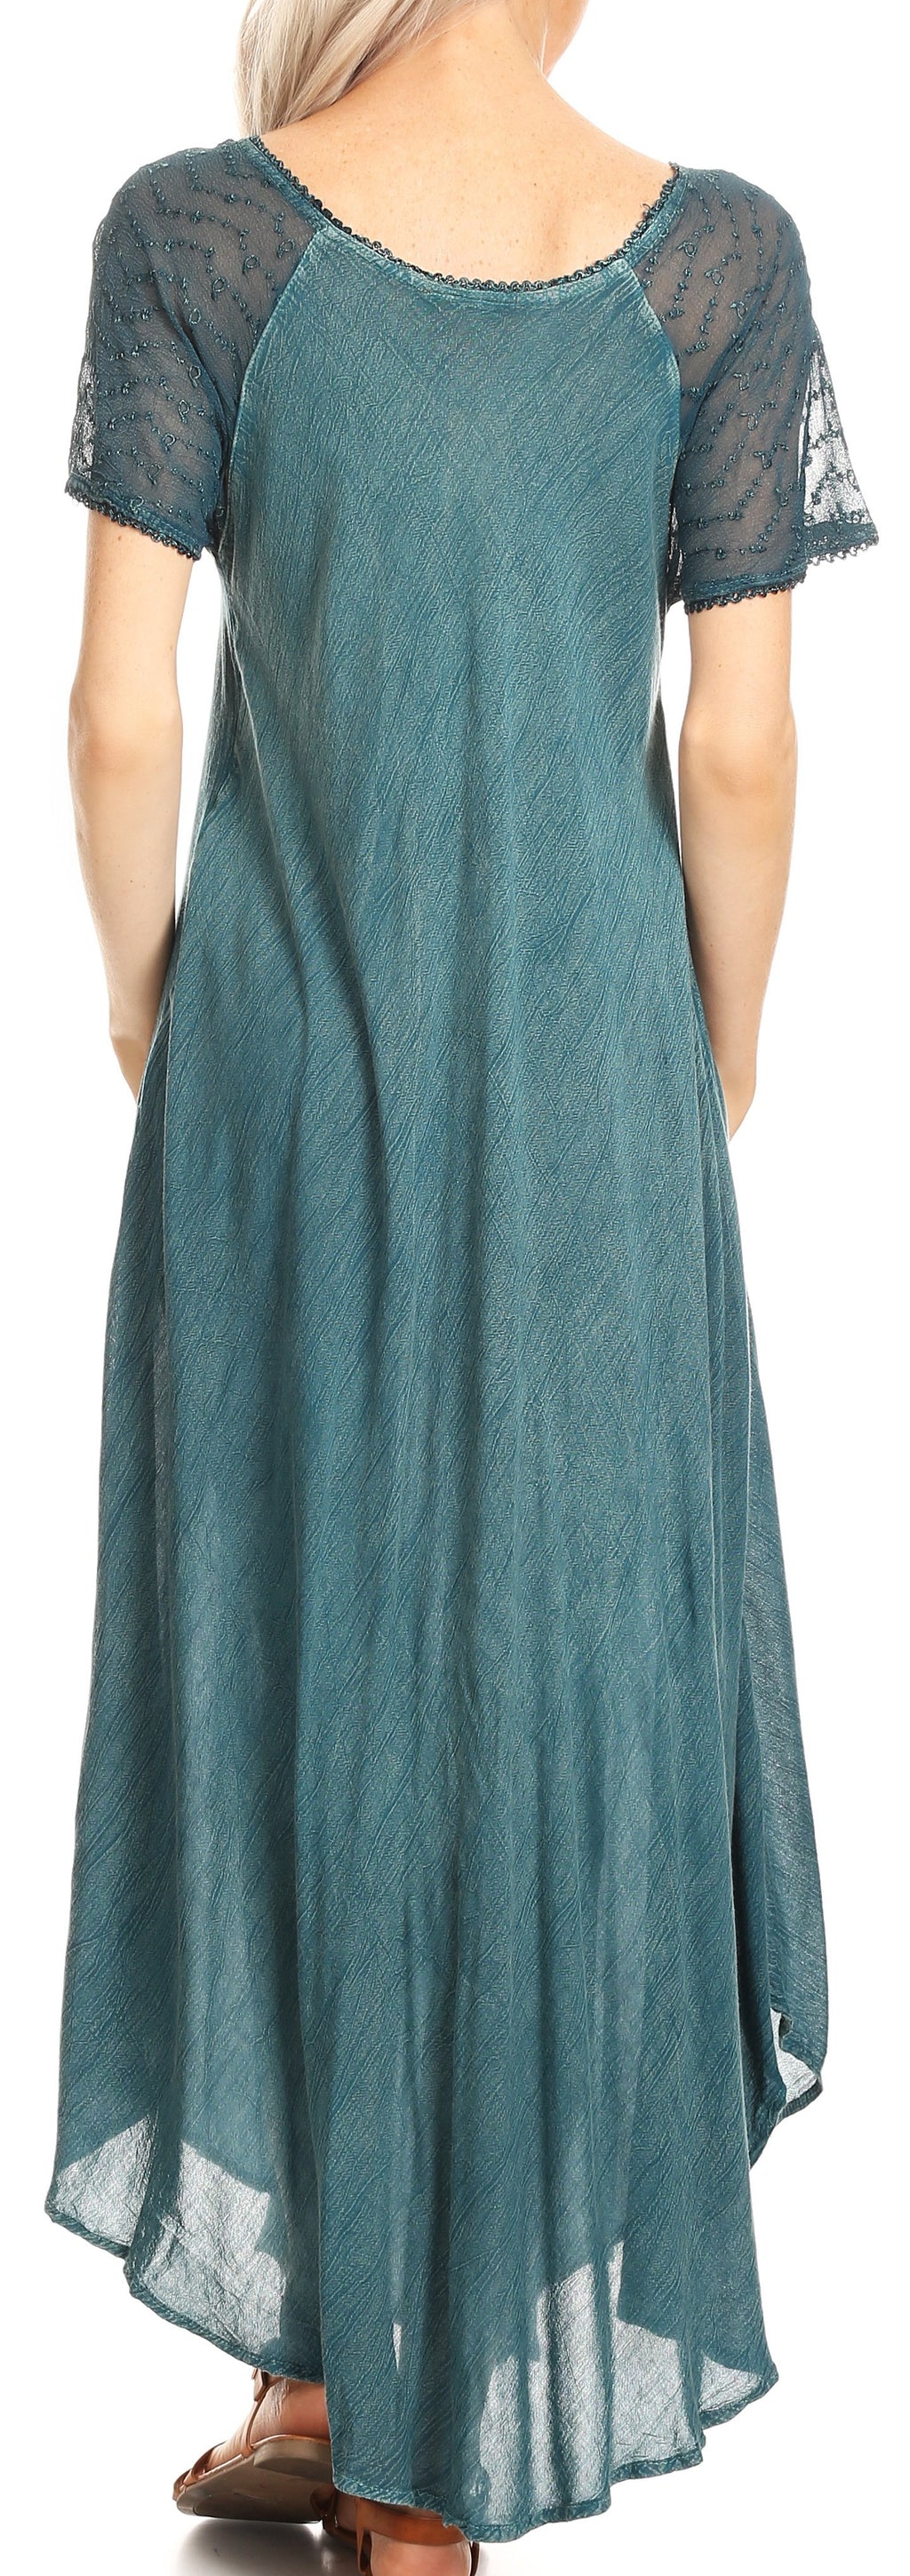 Sakkas Helena Embroidered Nightgown / Women Sleepwear with Eyelet Slee